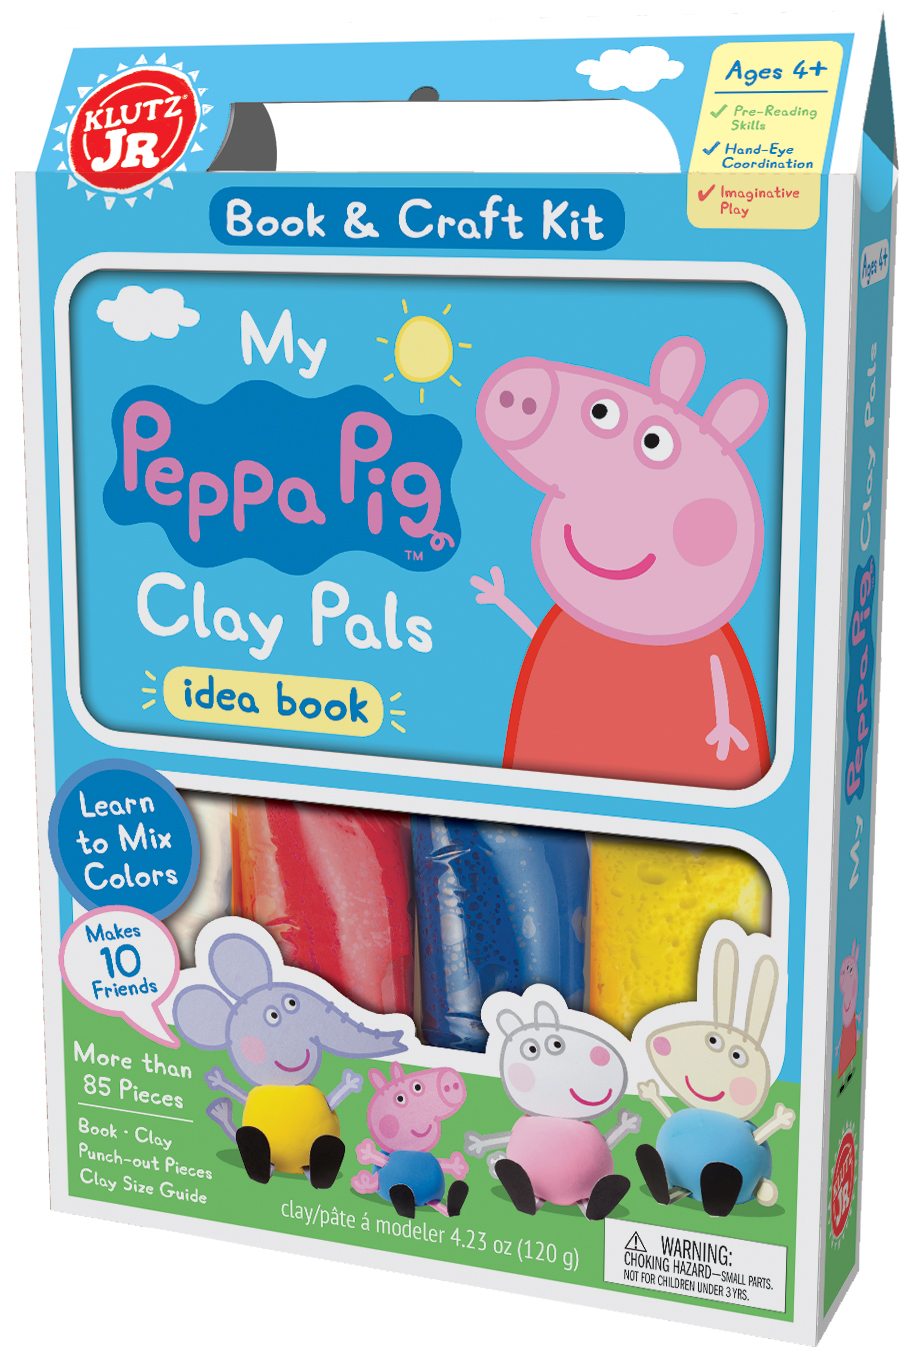 Black Friday shopping: Peppa Pig Clay Kit | Sponsor